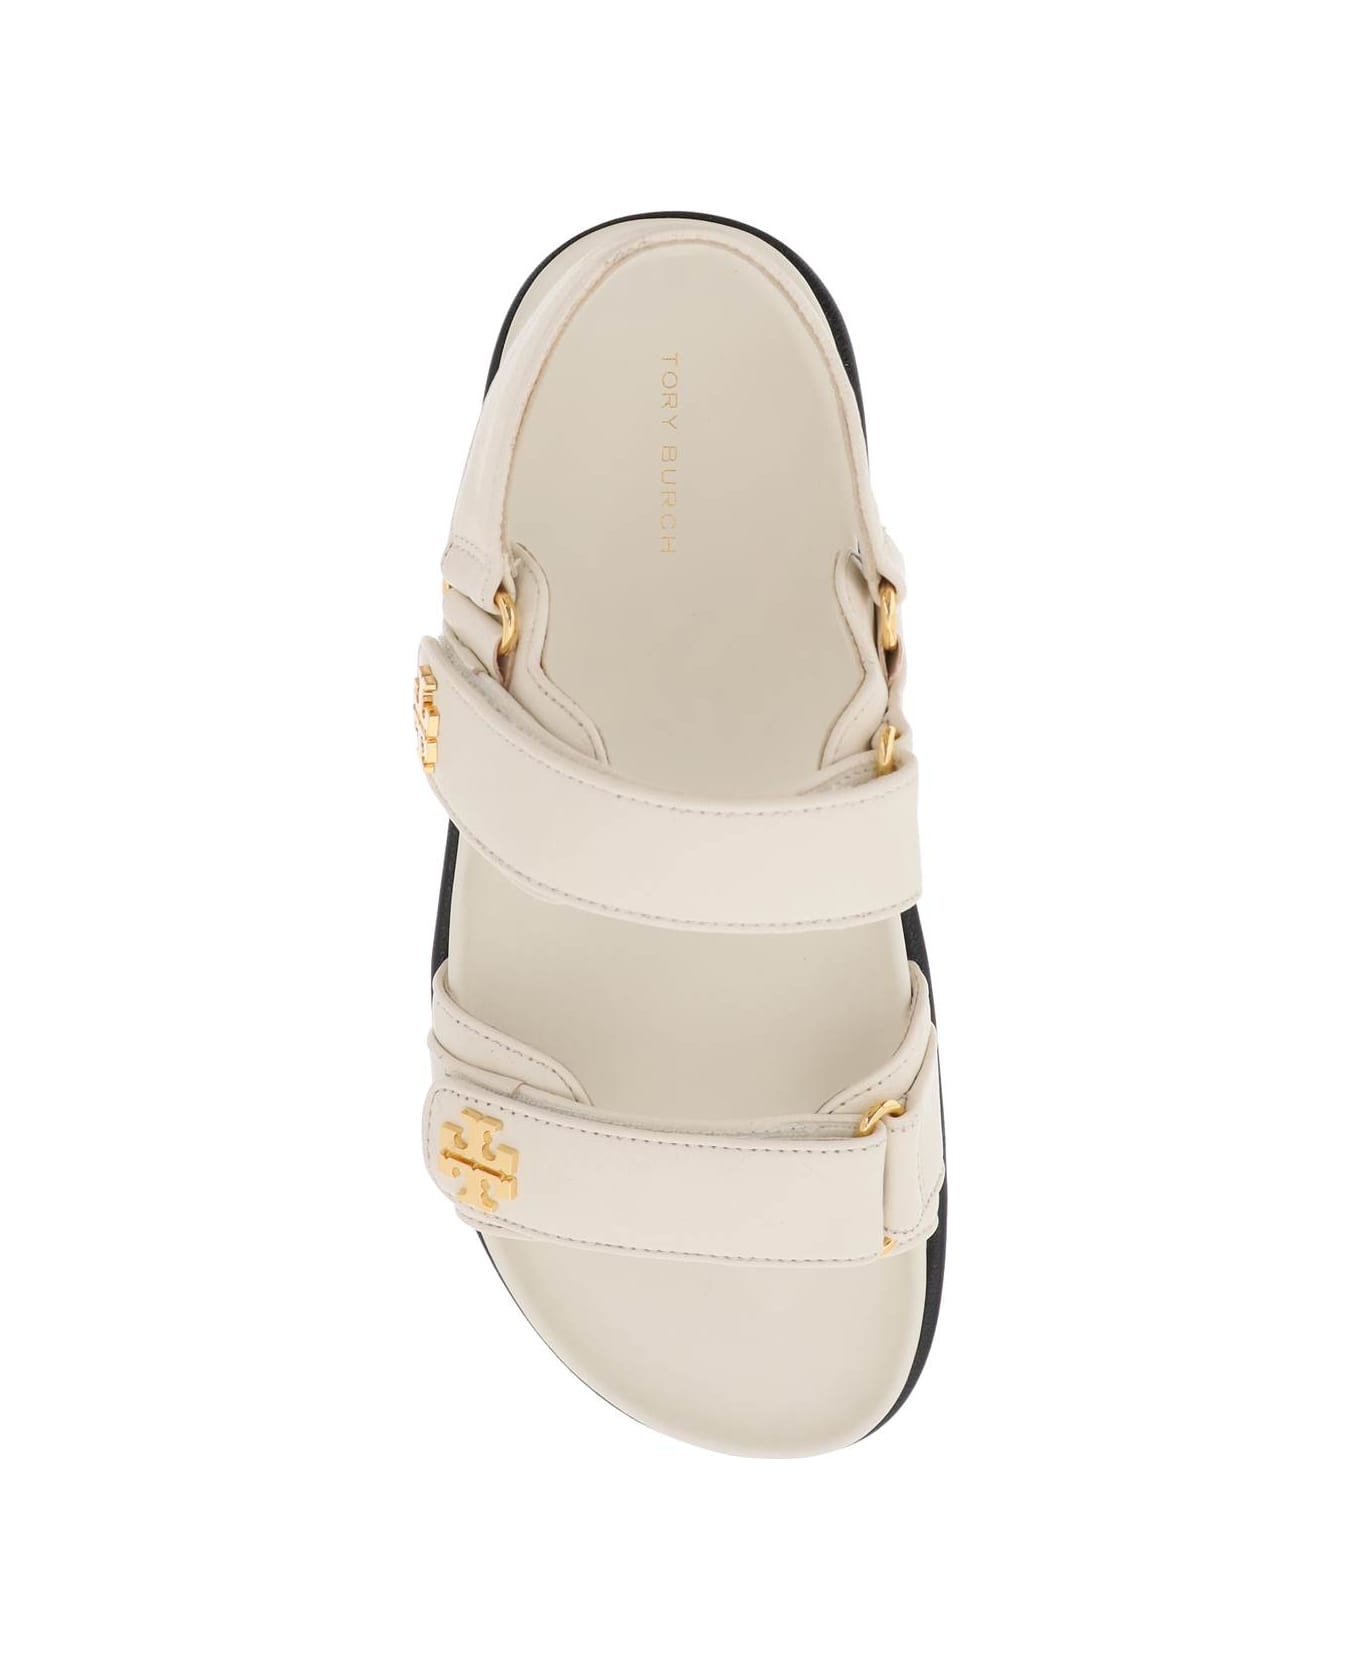 Tory Burch Kira Sport Sandals - NEW IVORY (White)